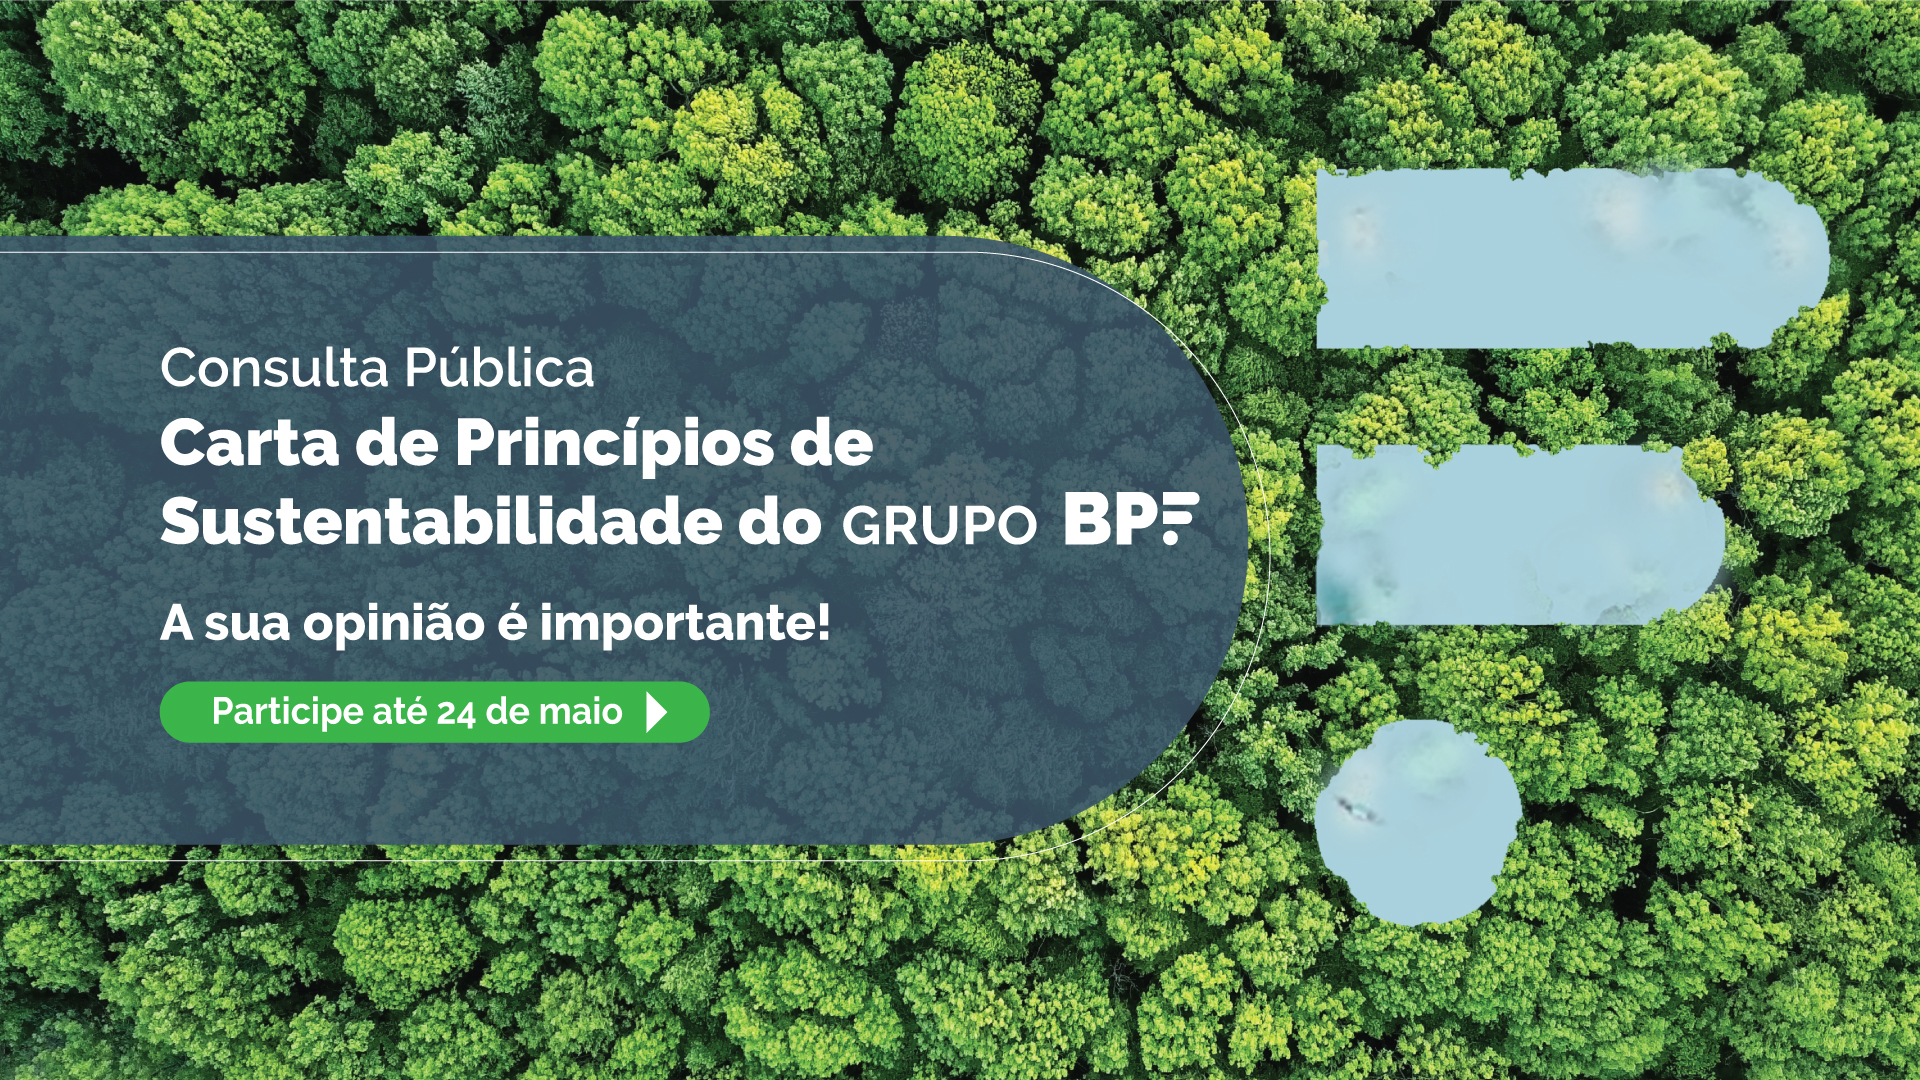 Consulta Pública sobre Carta de Princípios de Sustentabilidade do Grupo BPF